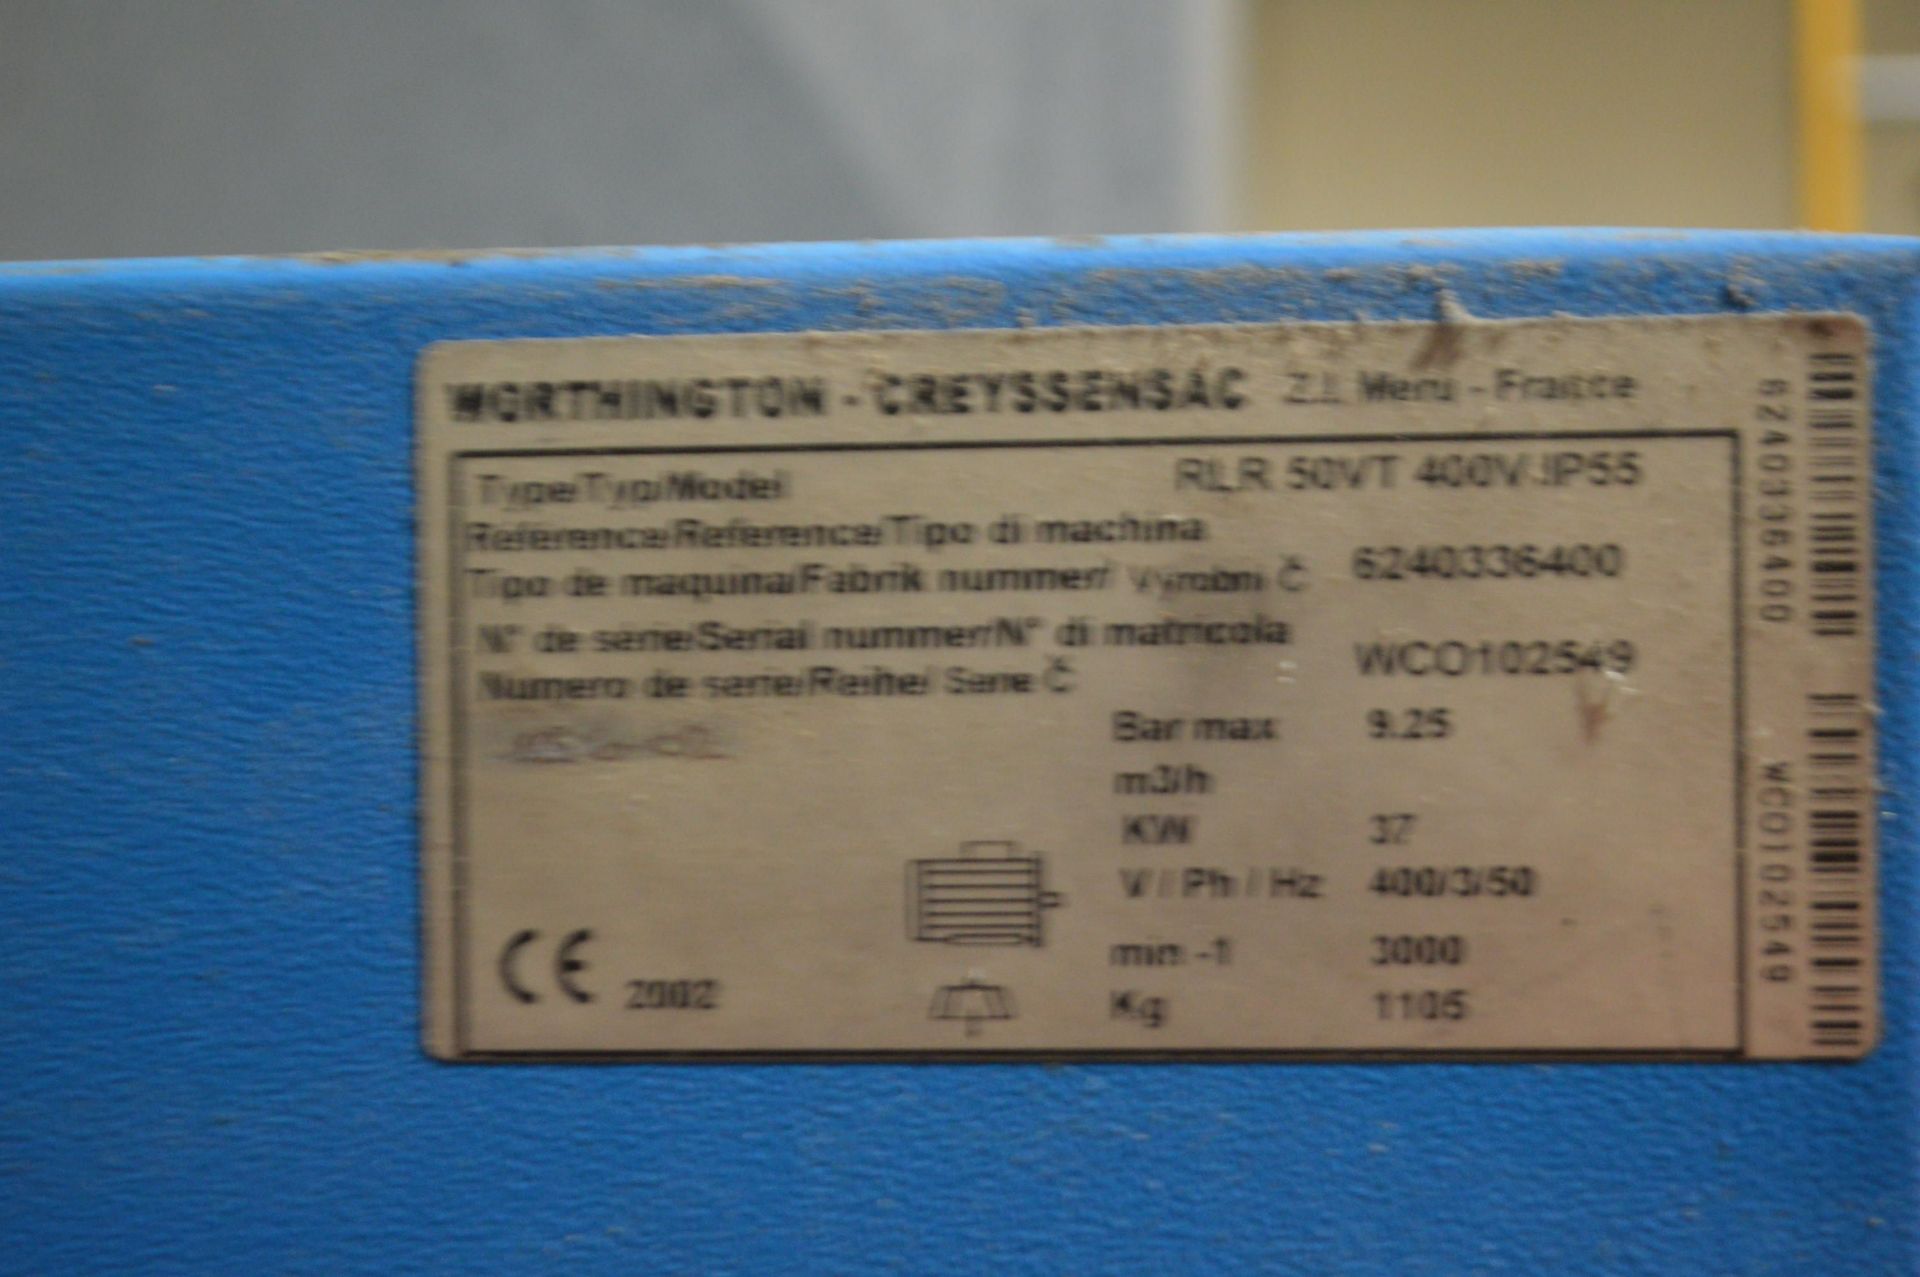 Worthington Creyssensac ROLLAIR 50VT PACKAGE AIR COMPRESSOR, serial no. WCO102549, reference no. - Image 4 of 4